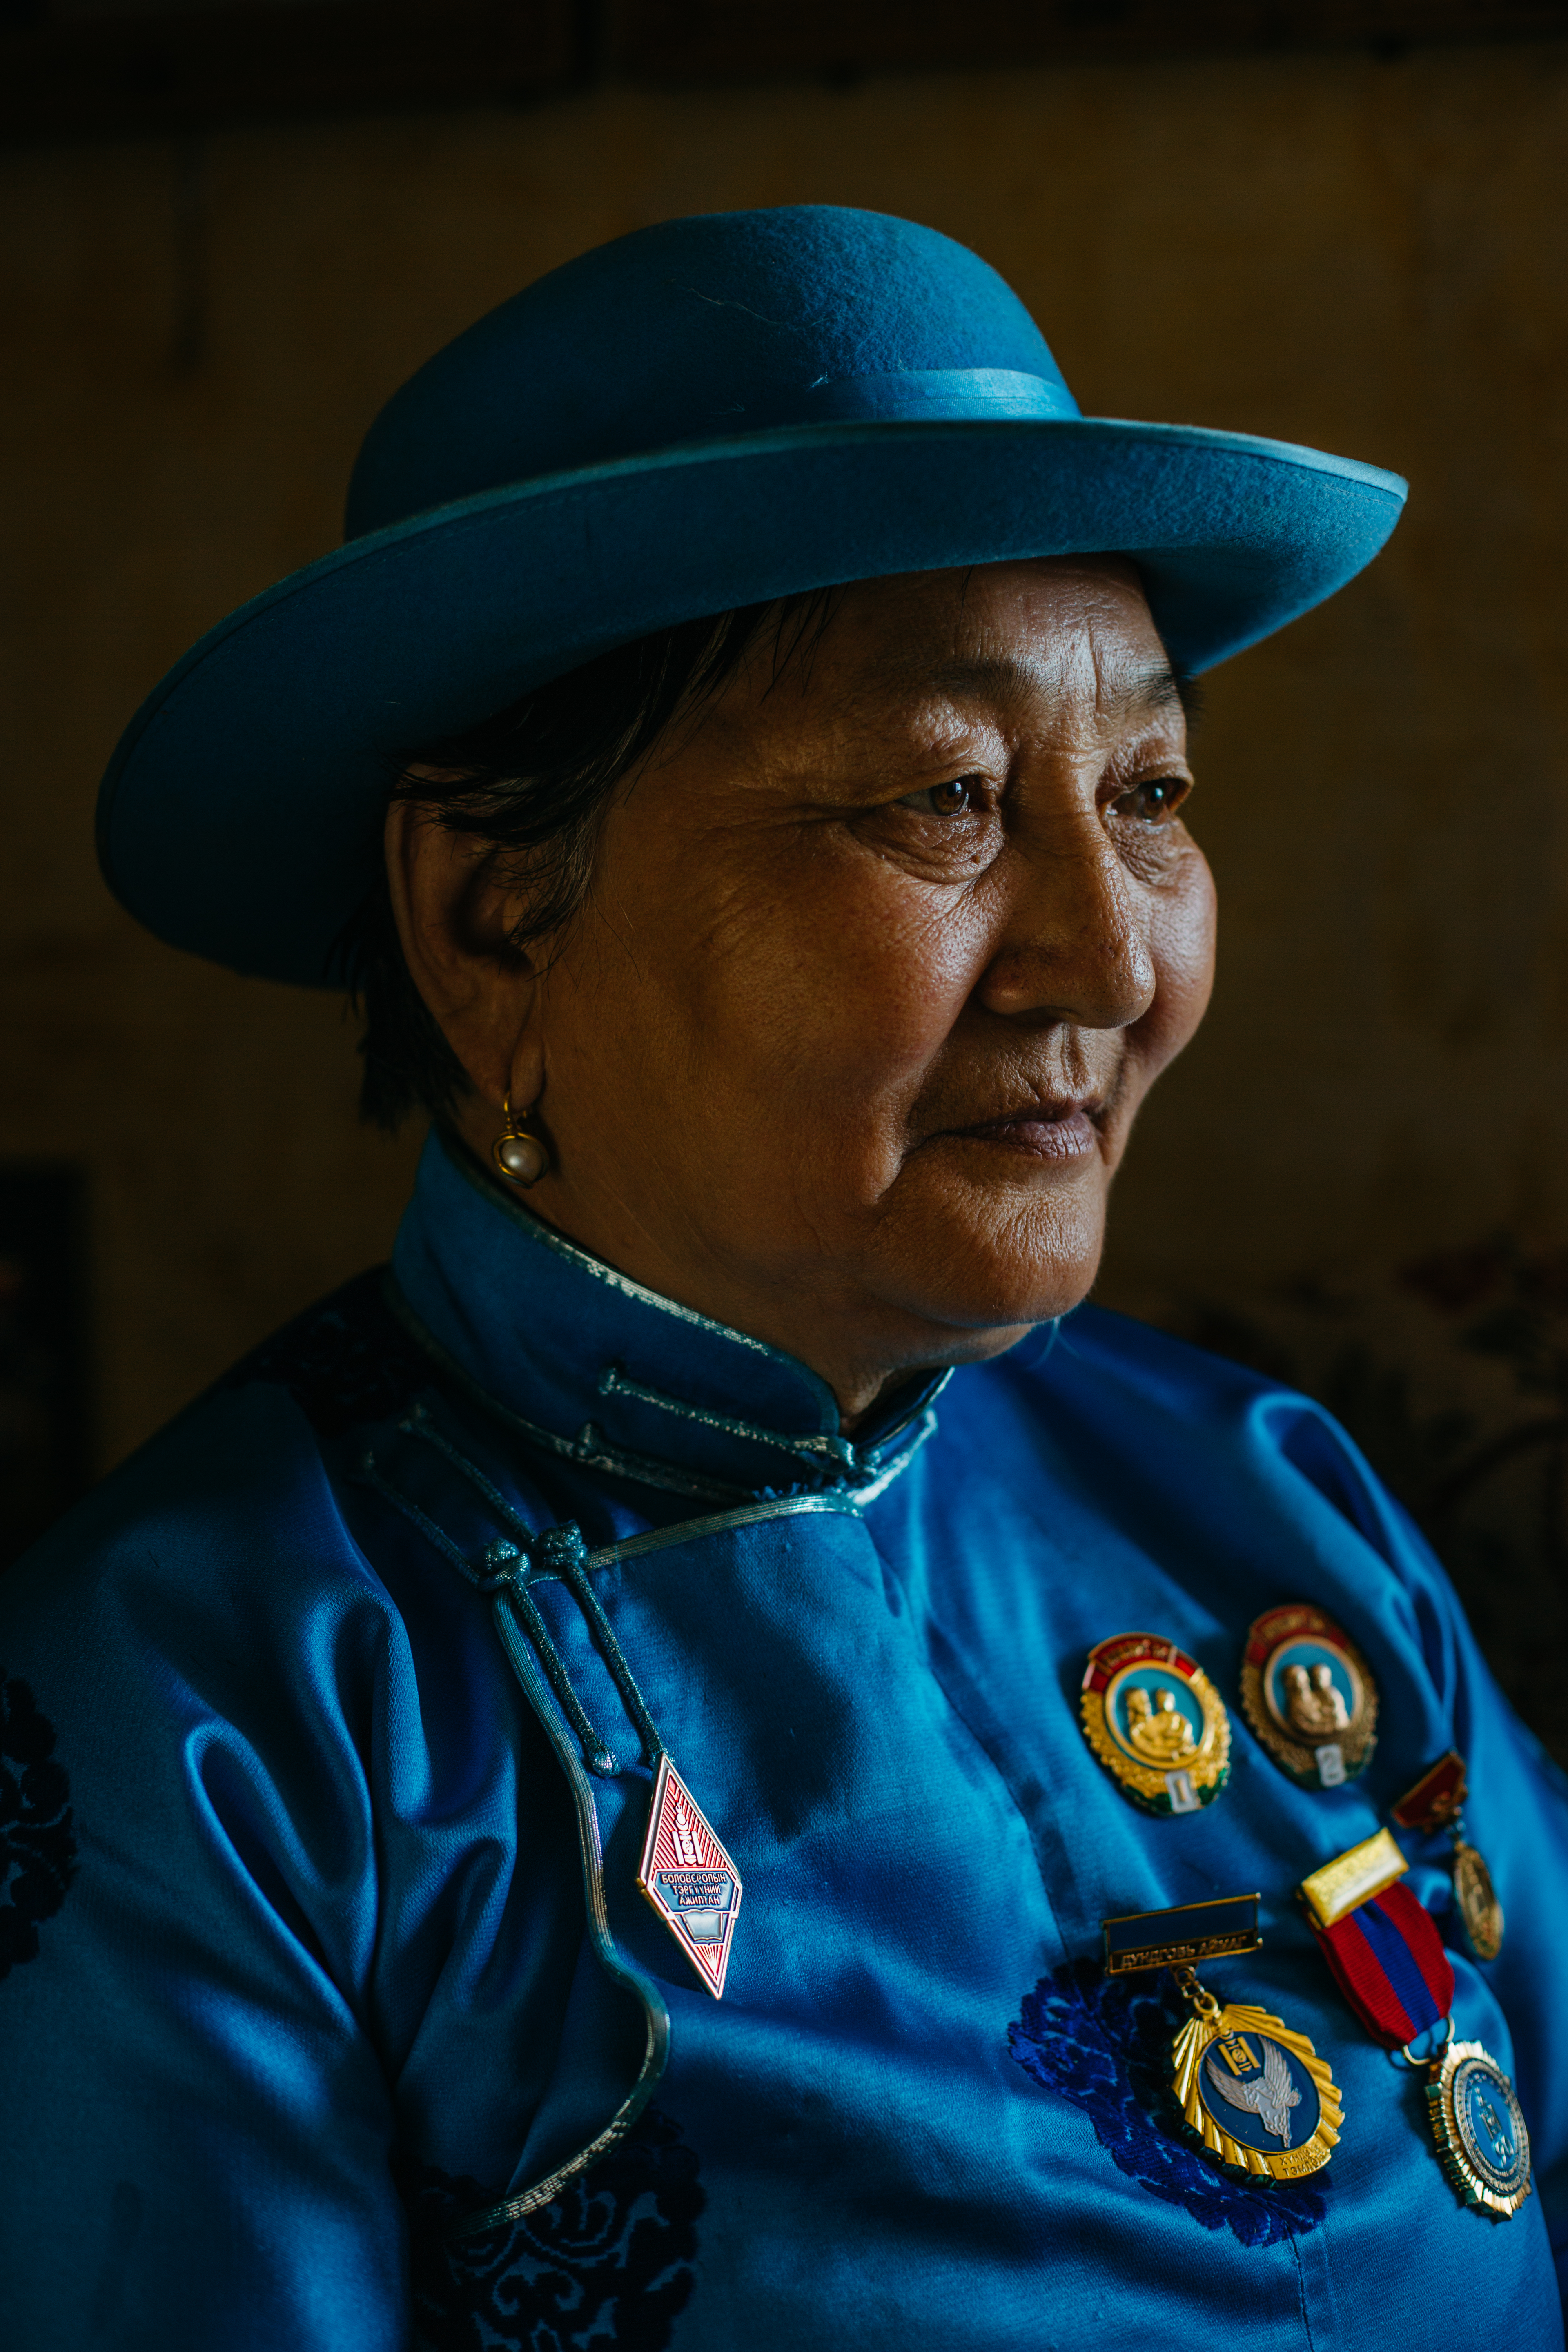 Dugerjav has 8 children and 22 grandchildren – in Mongolia, motherhood is seen as a patriotic duty and here she displays her Order of Glorious Motherhood medals